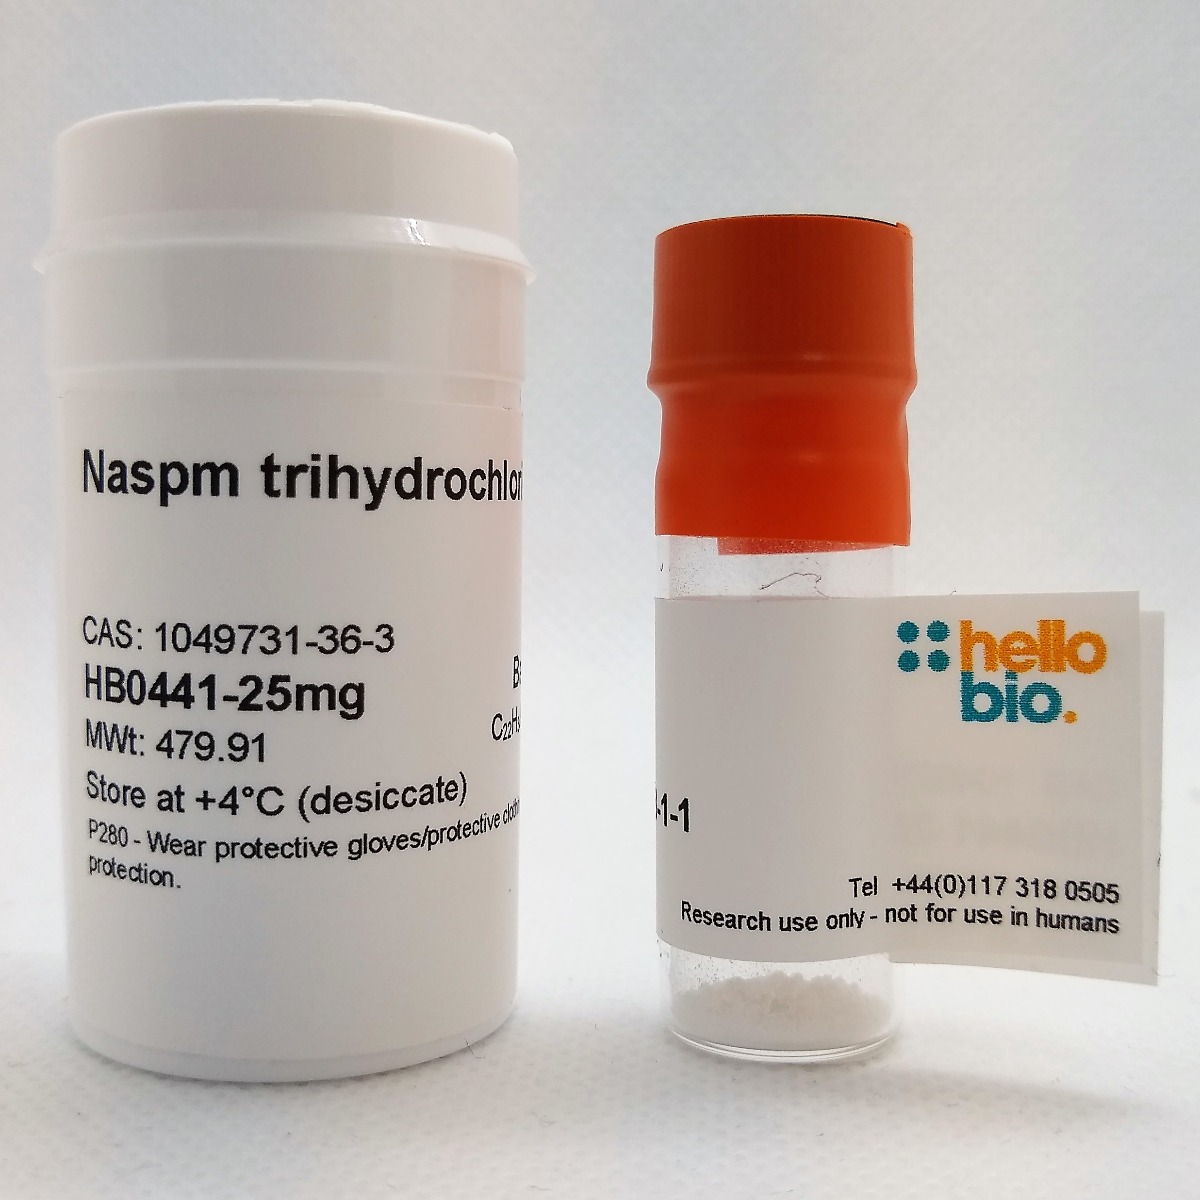 Naspm trihydrochloride product vial image | Hello Bio